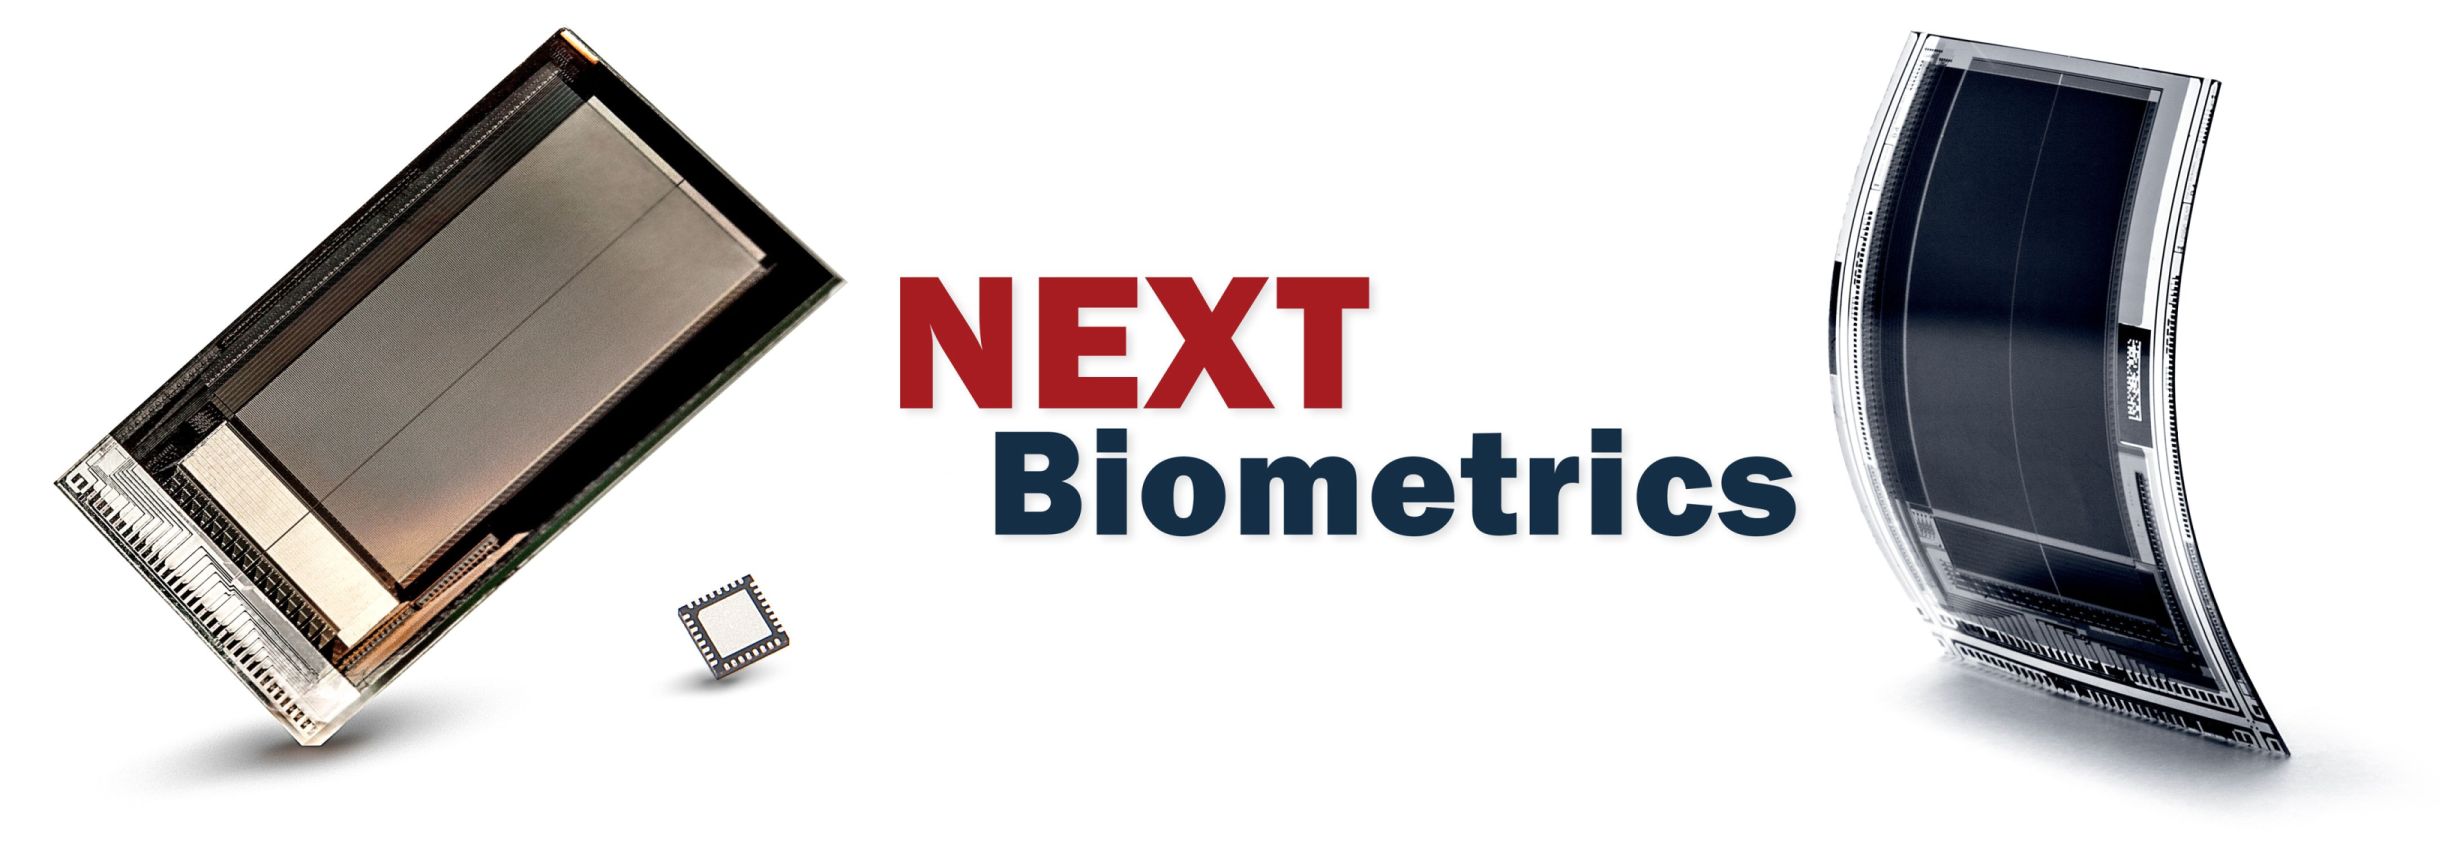 NEXT Biometrics Intr